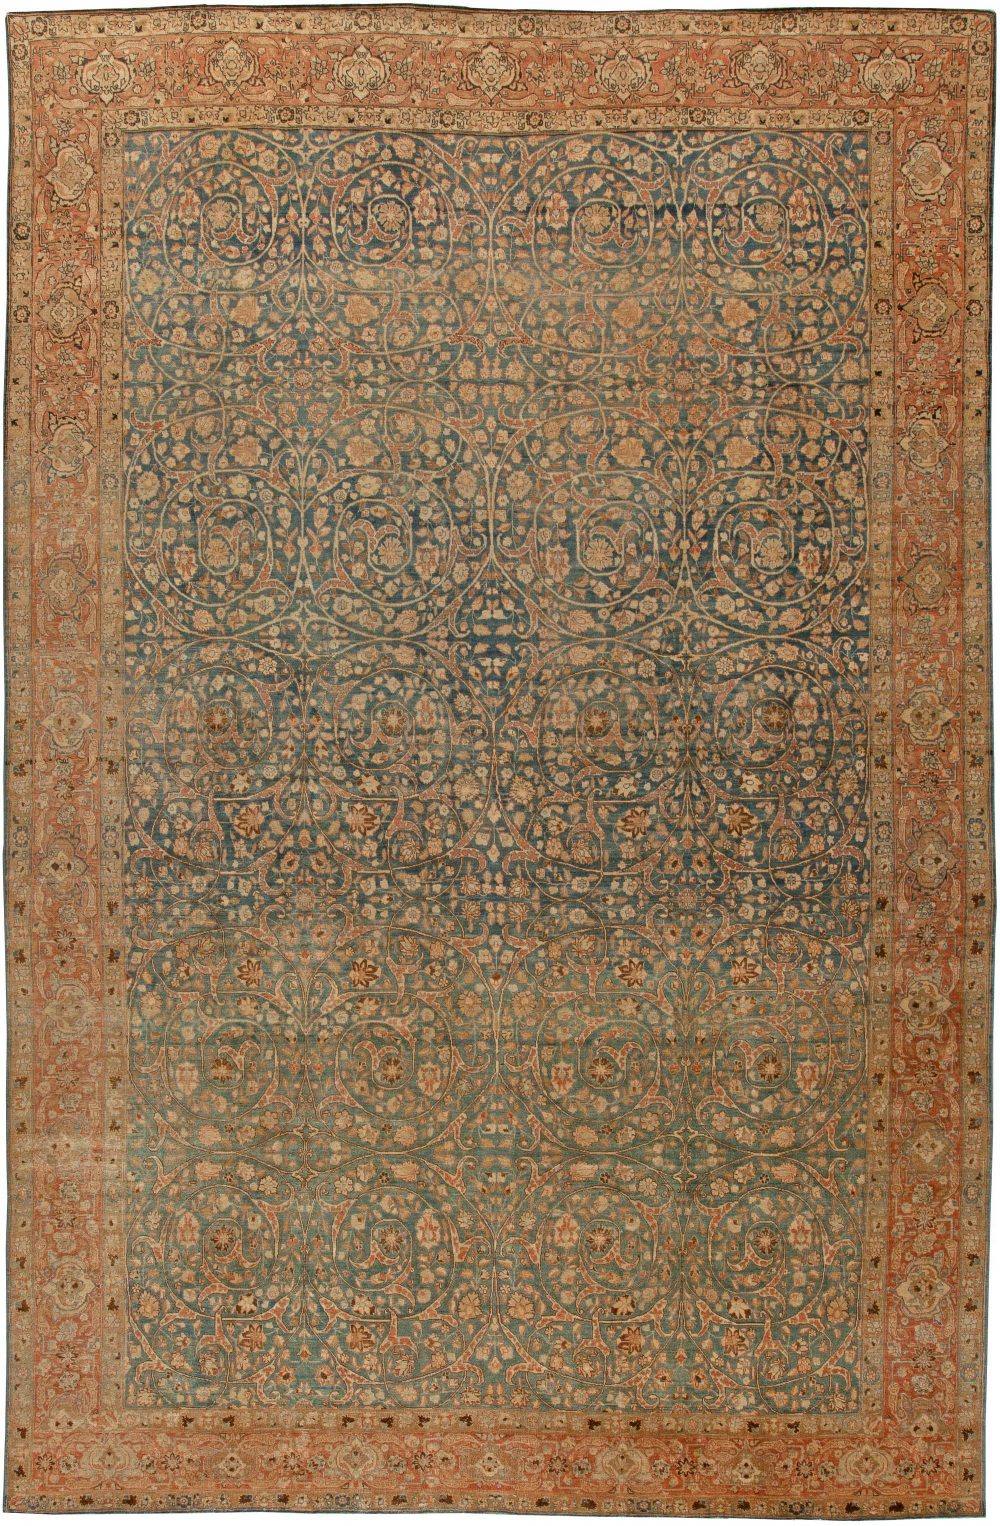 Antique Persian Tabriz Rust, Beige and Gray-Blue Handwoven Wool Carpet BB5737